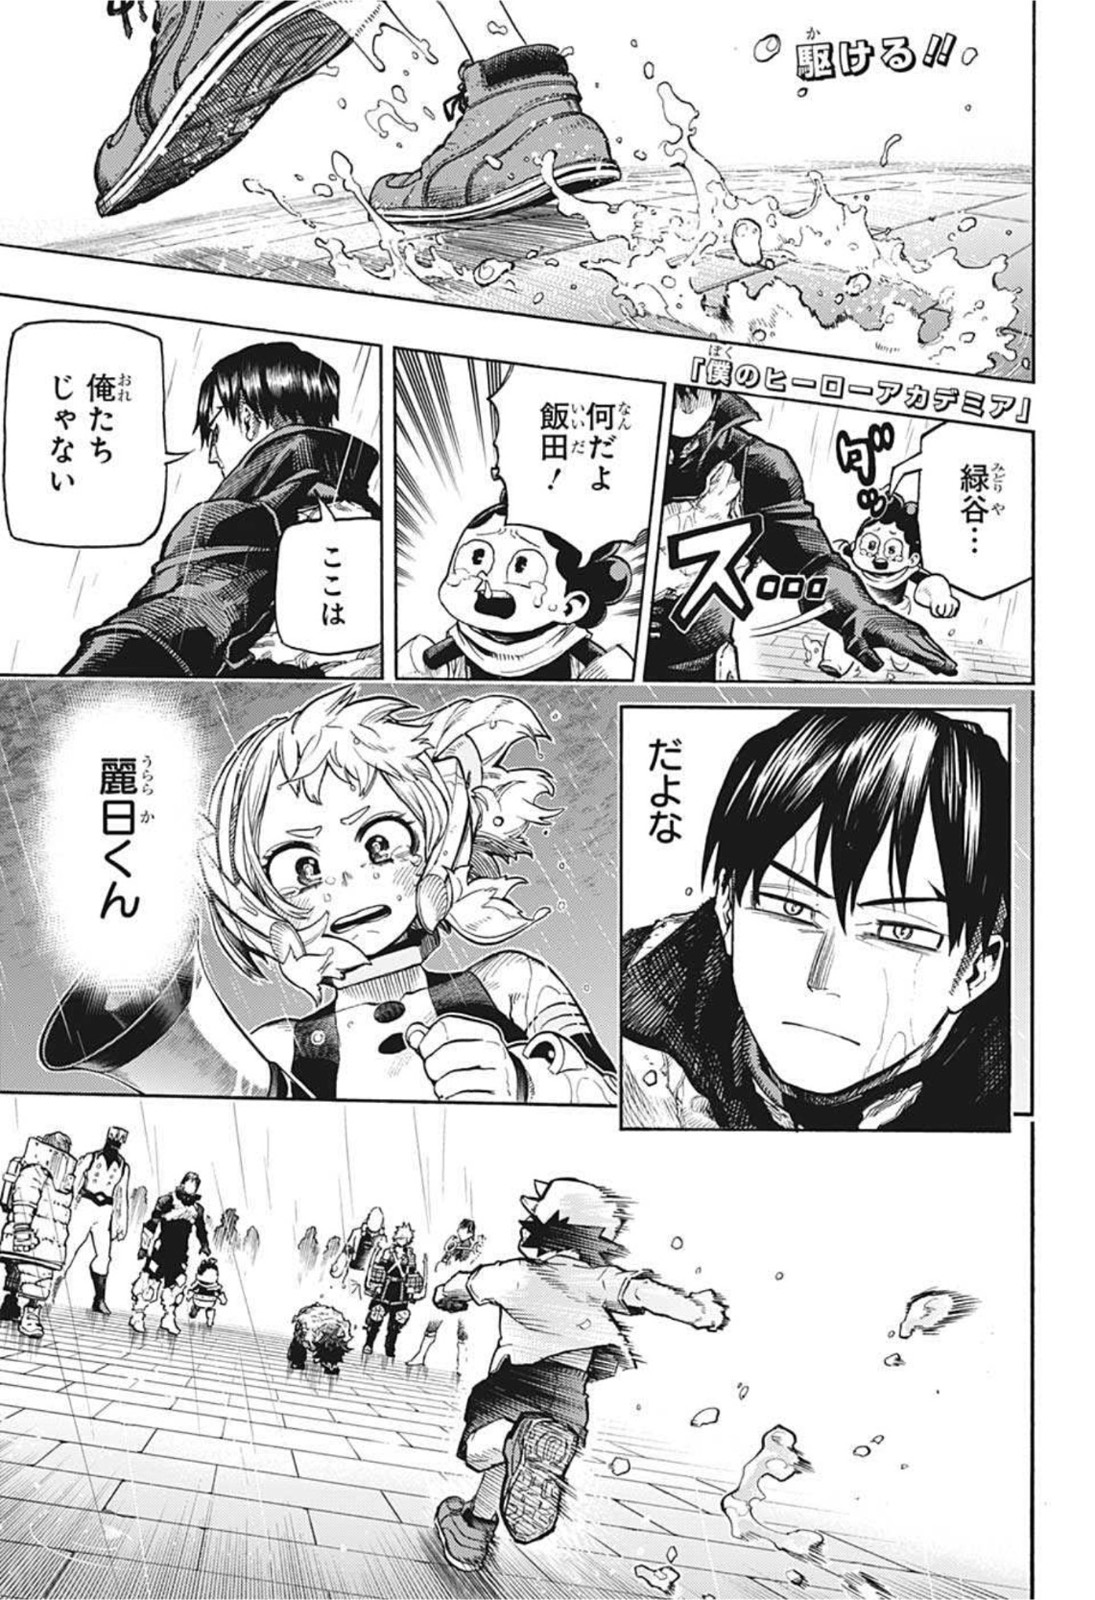 Boku no Hero Academia - Chapter 325 - Page 1